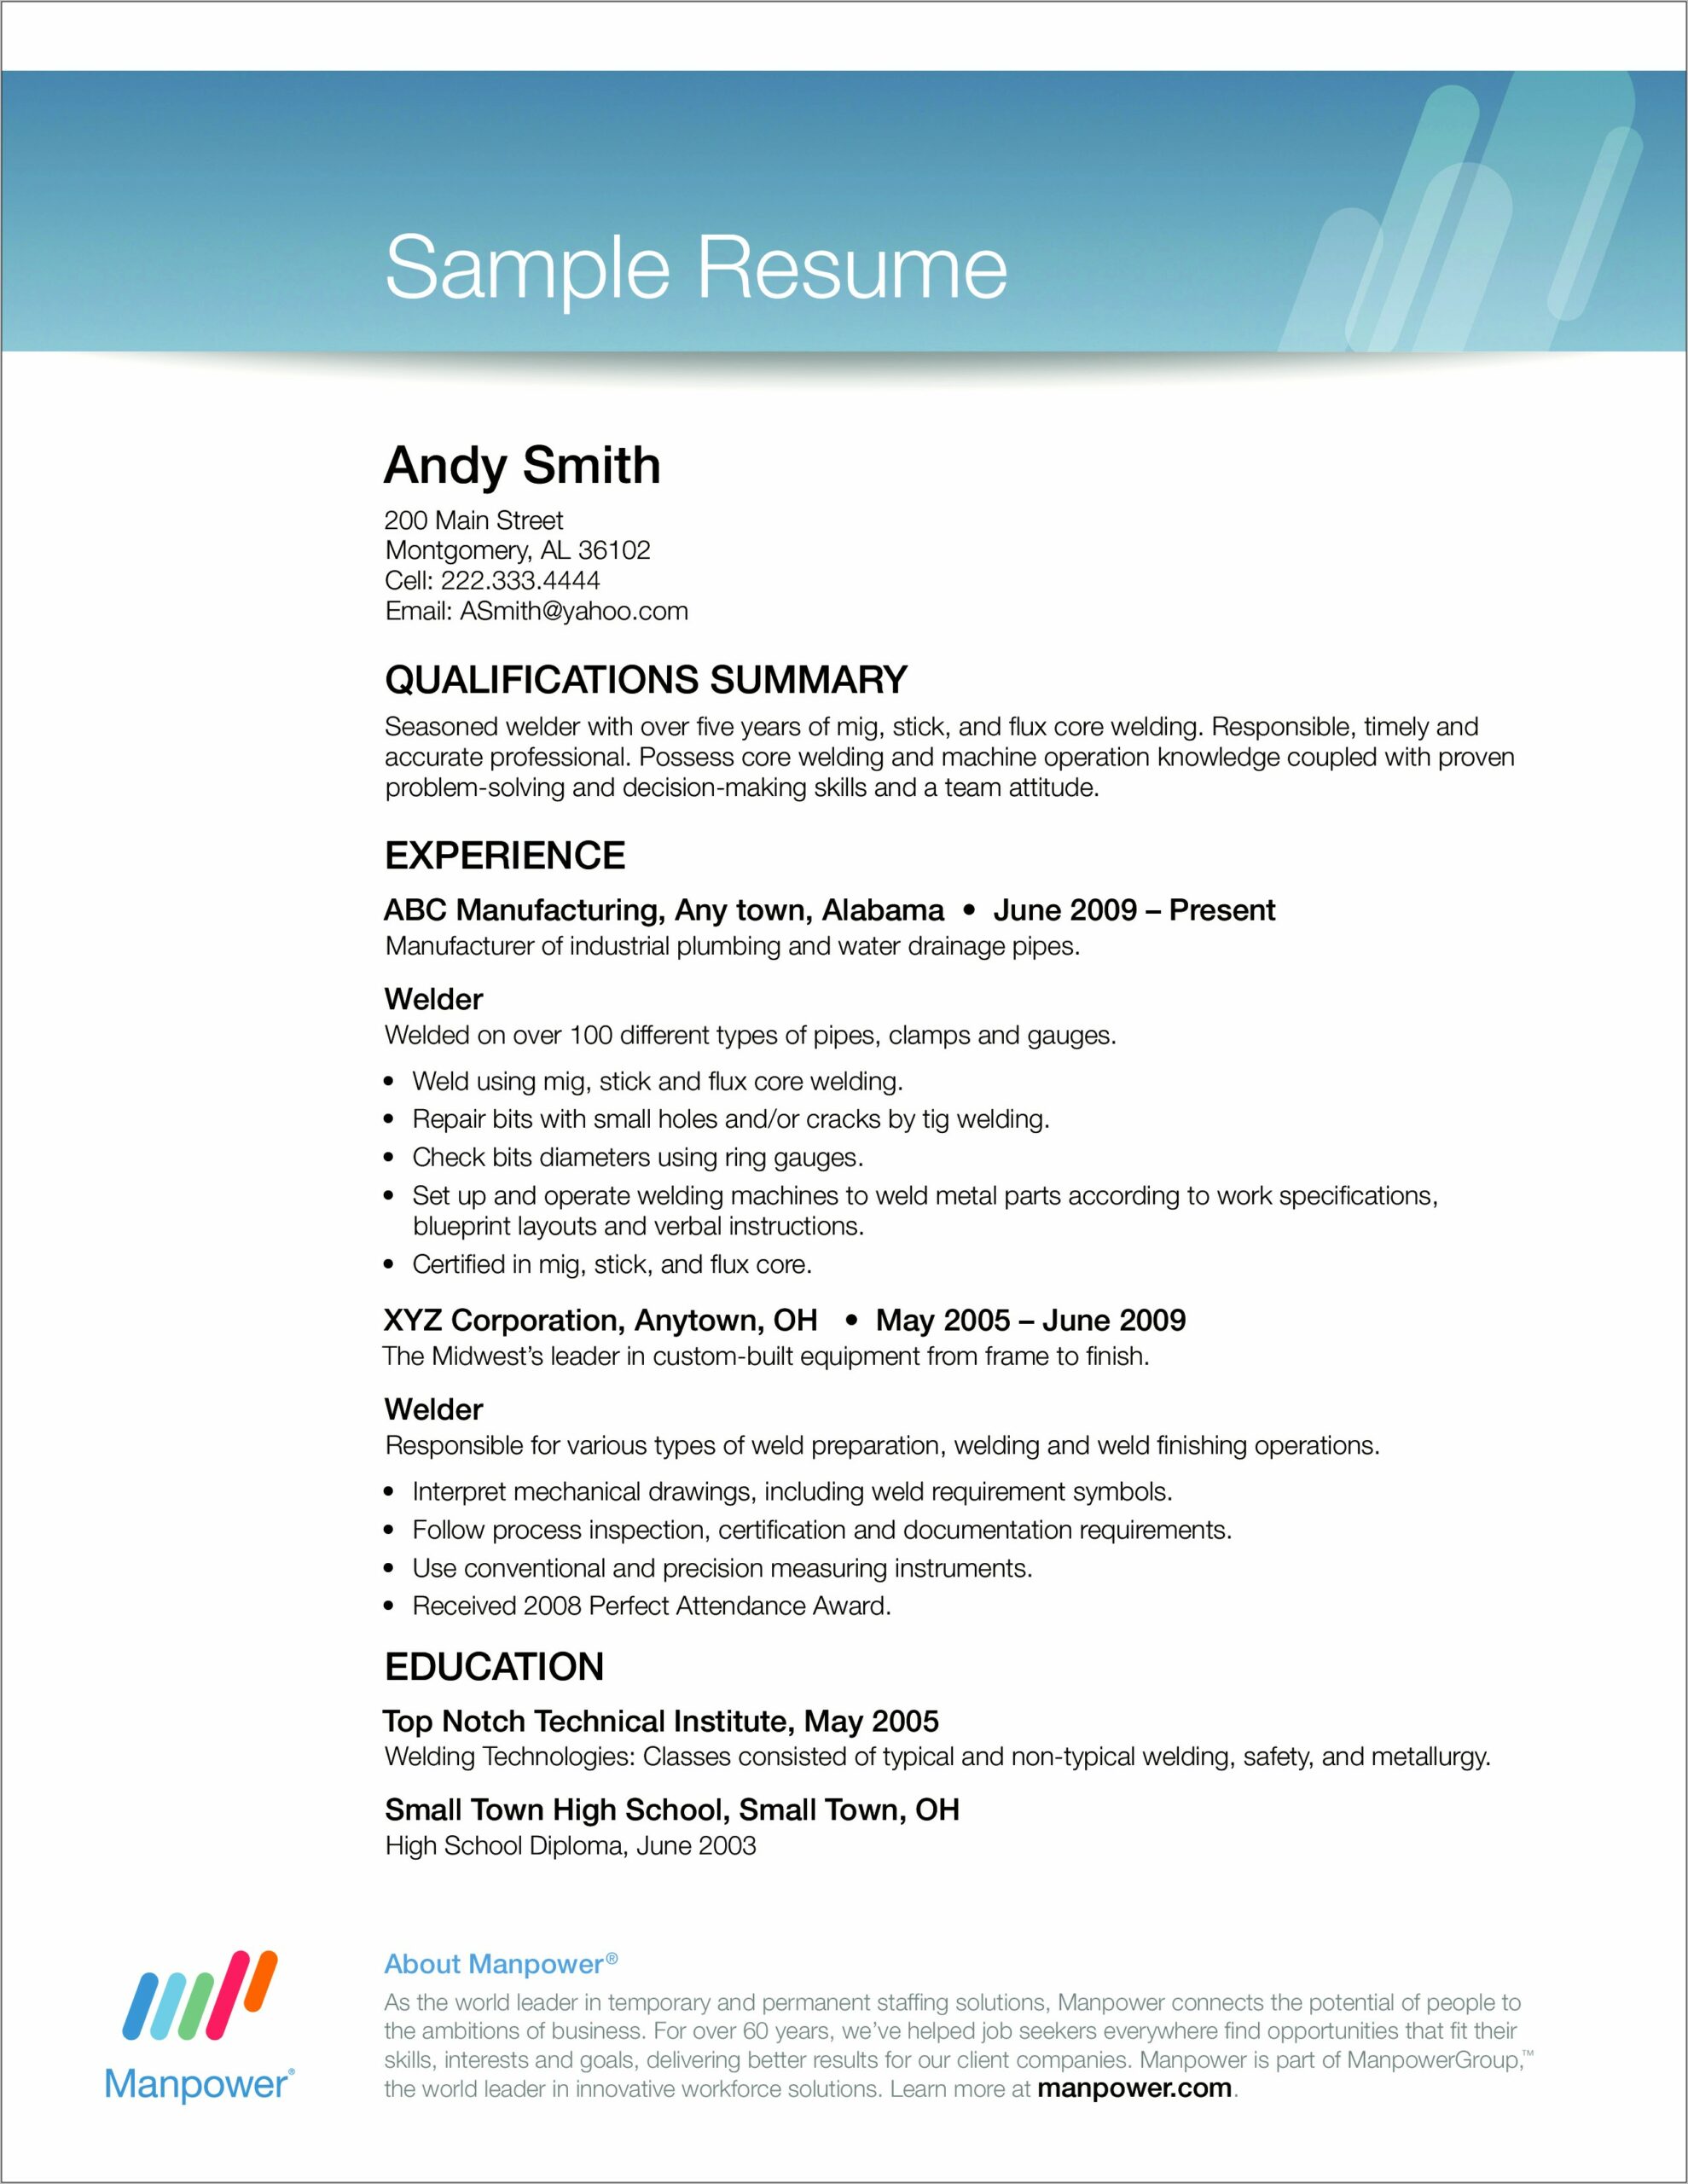 Job Application Simple Resume Format